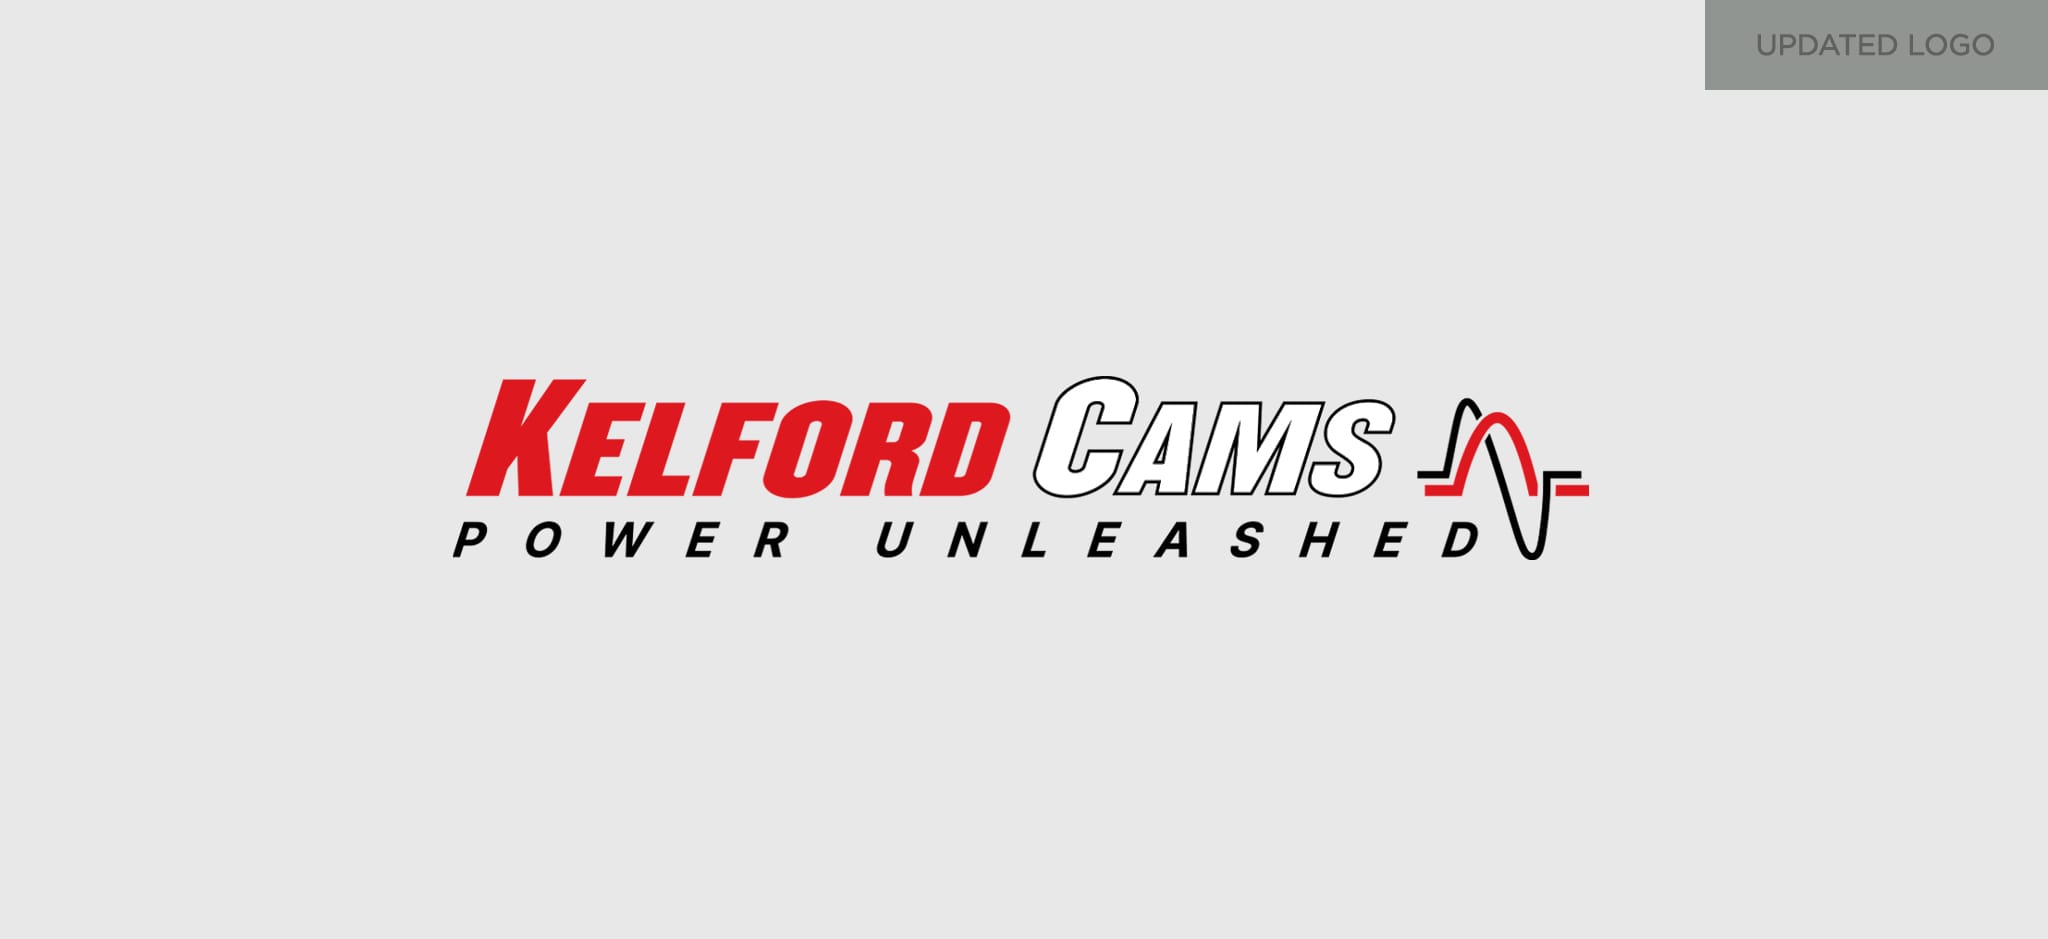 Kelford Cams logo design by MoMac Christchurch graphic designers